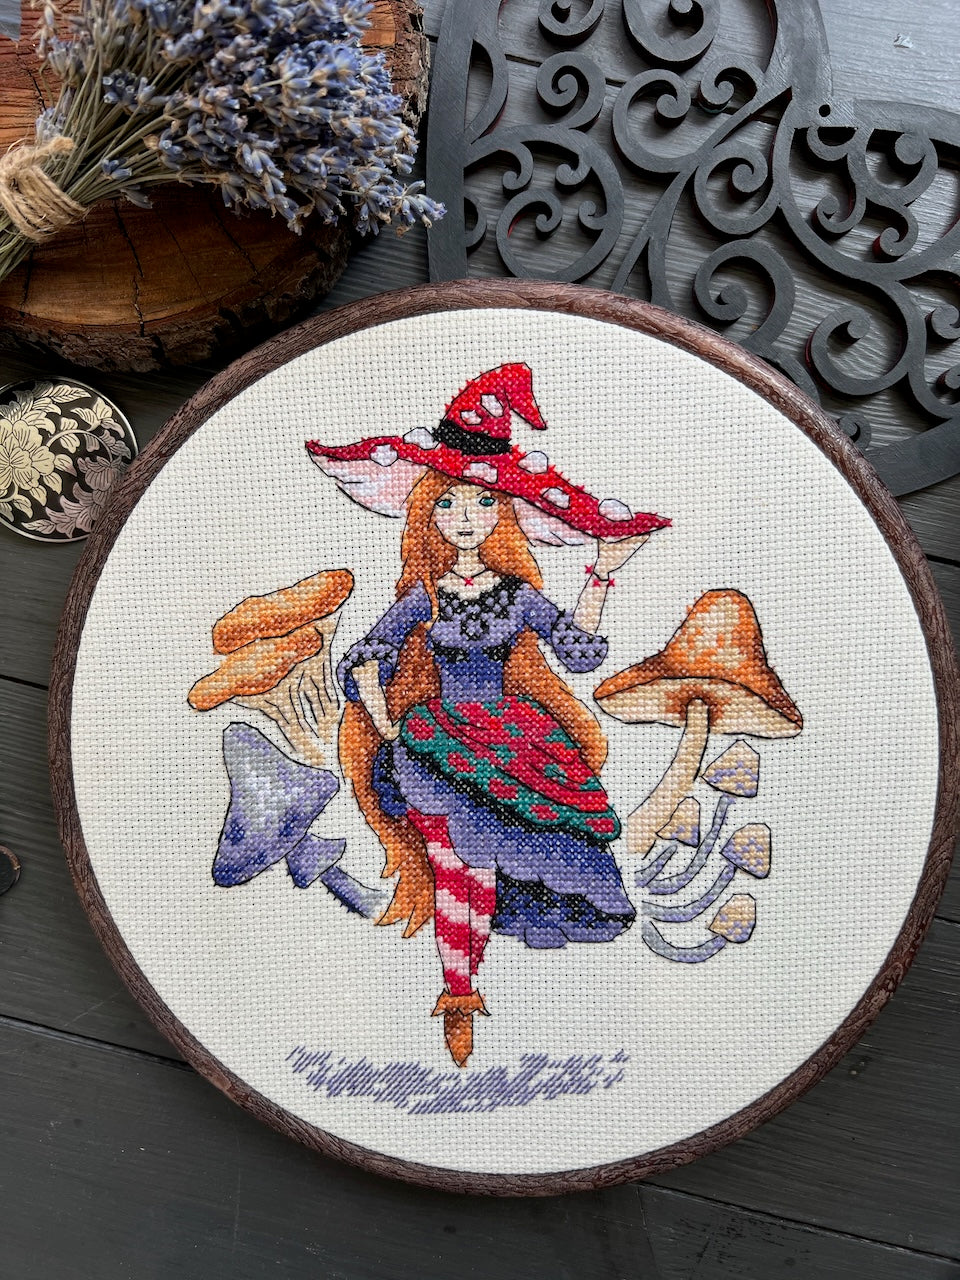 Witch - cross stitch pattern